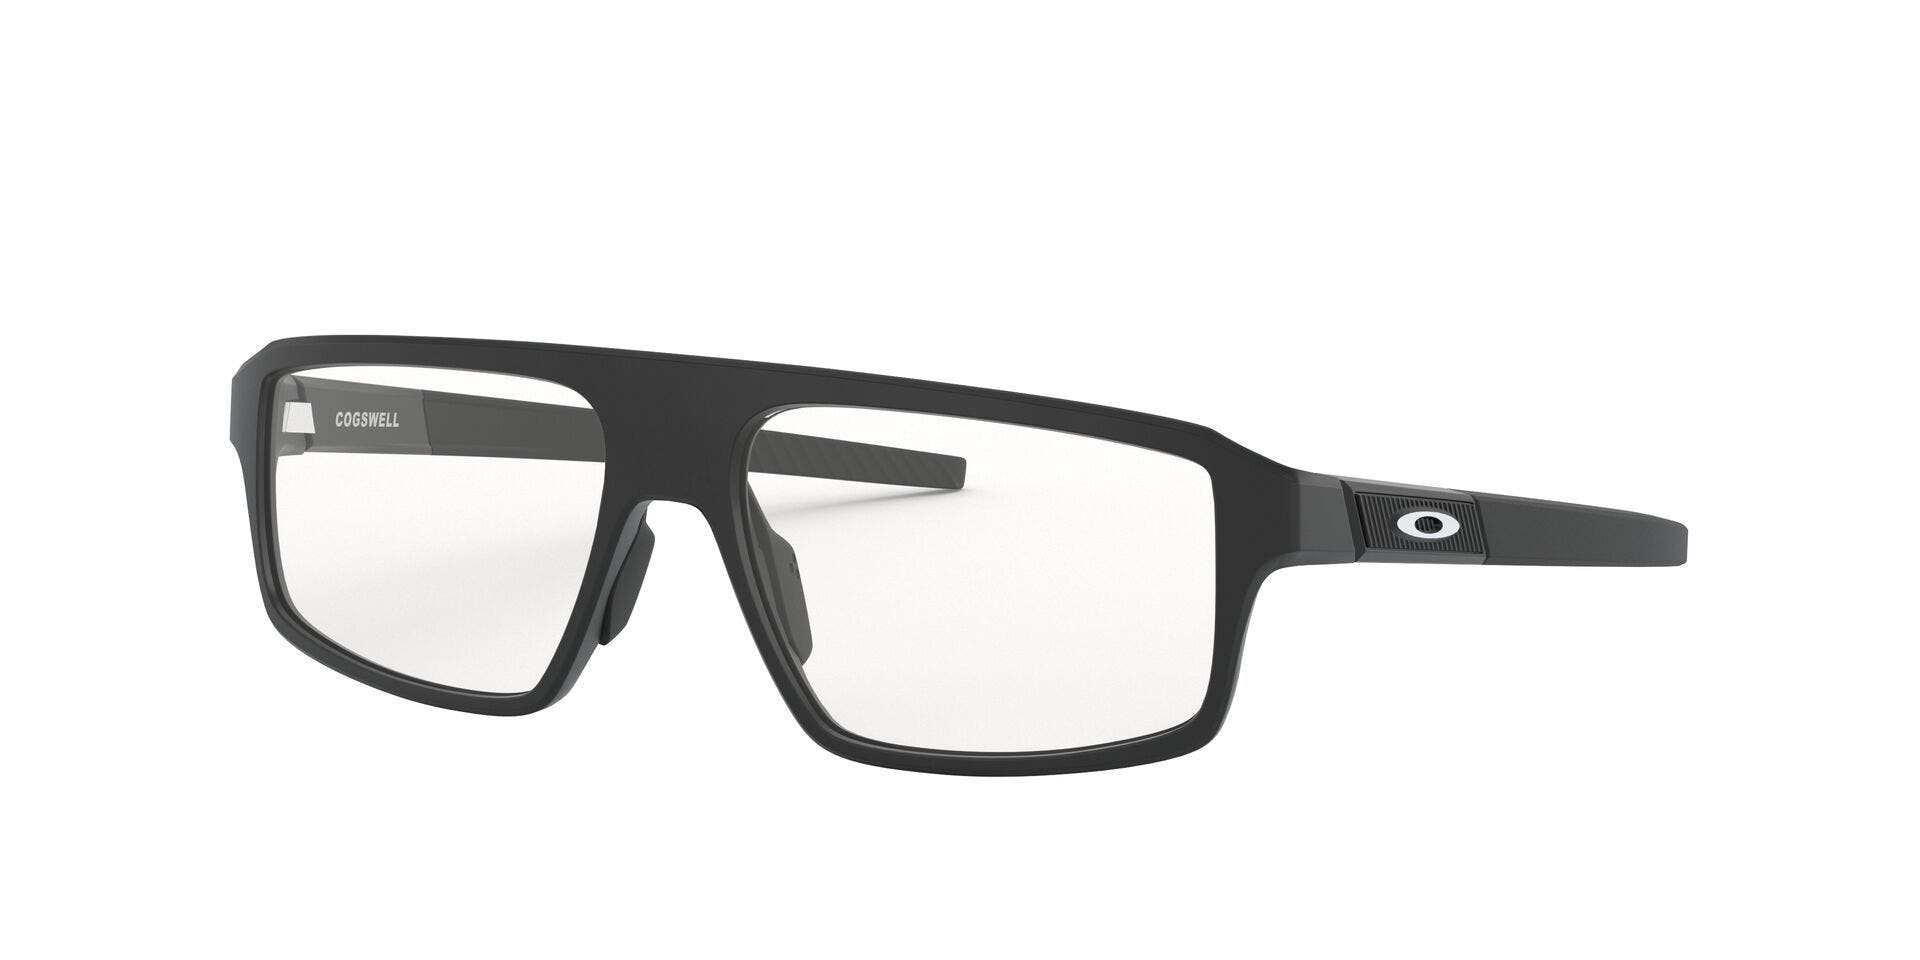 Oakley Fall 2019 Eyeglasses Collection | SportRx